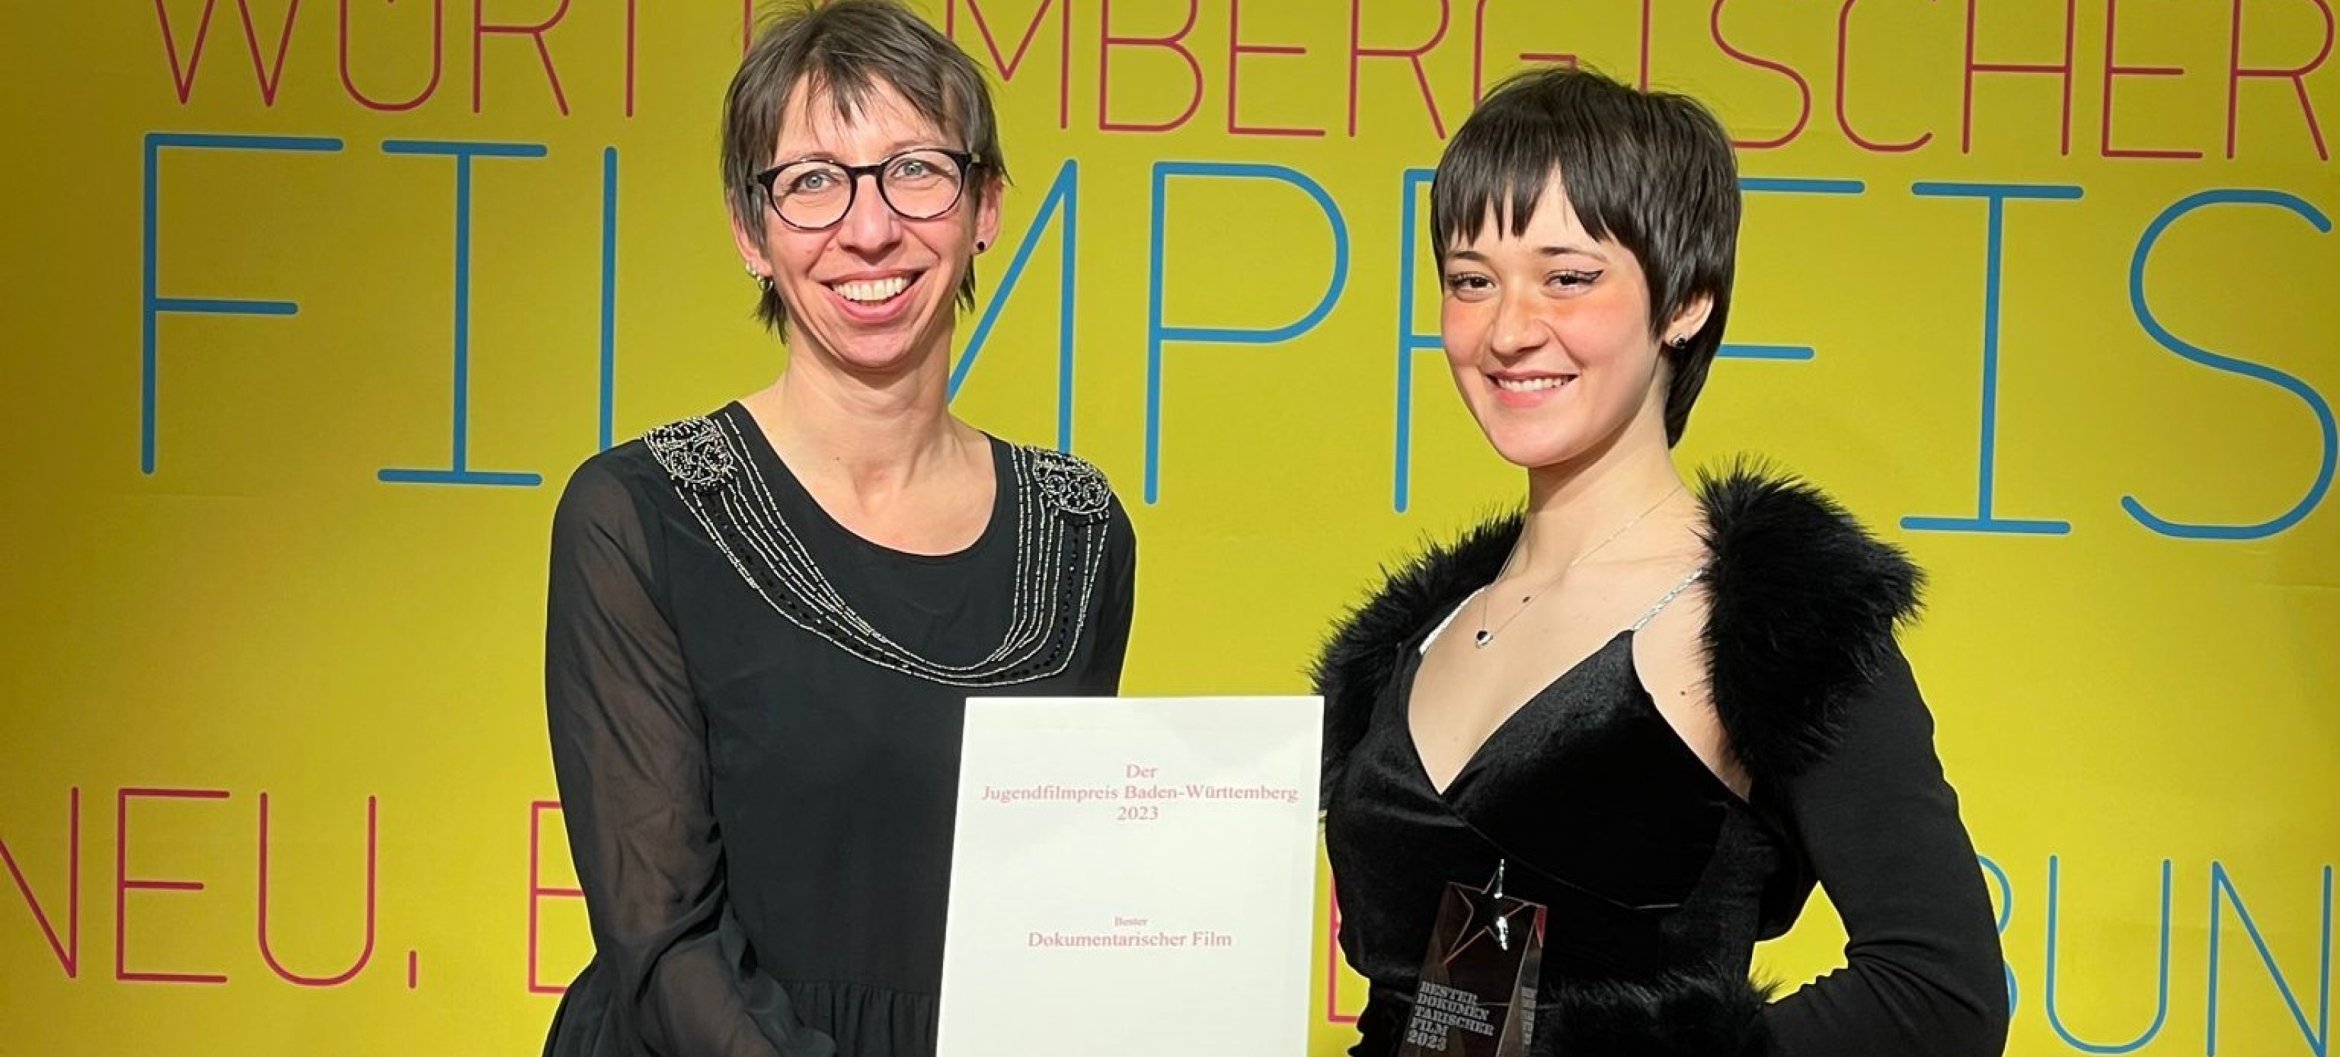 Alisa Grabowski (right) accepts her prize